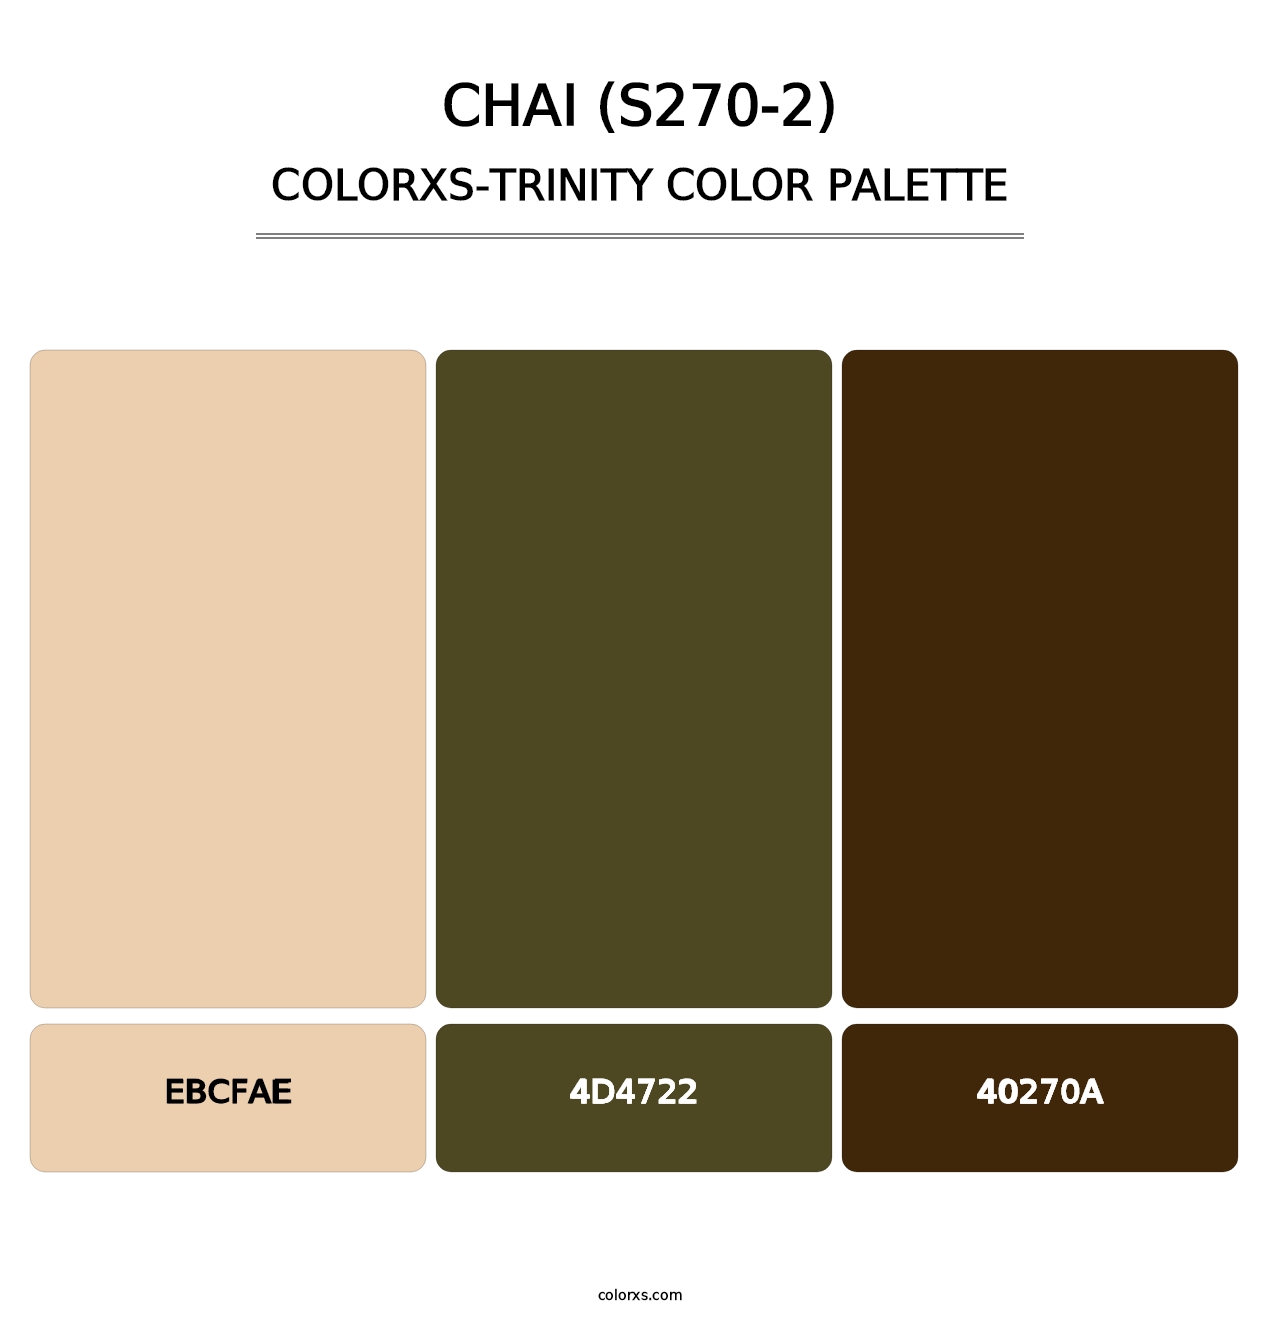 Chai (S270-2) - Colorxs Trinity Palette